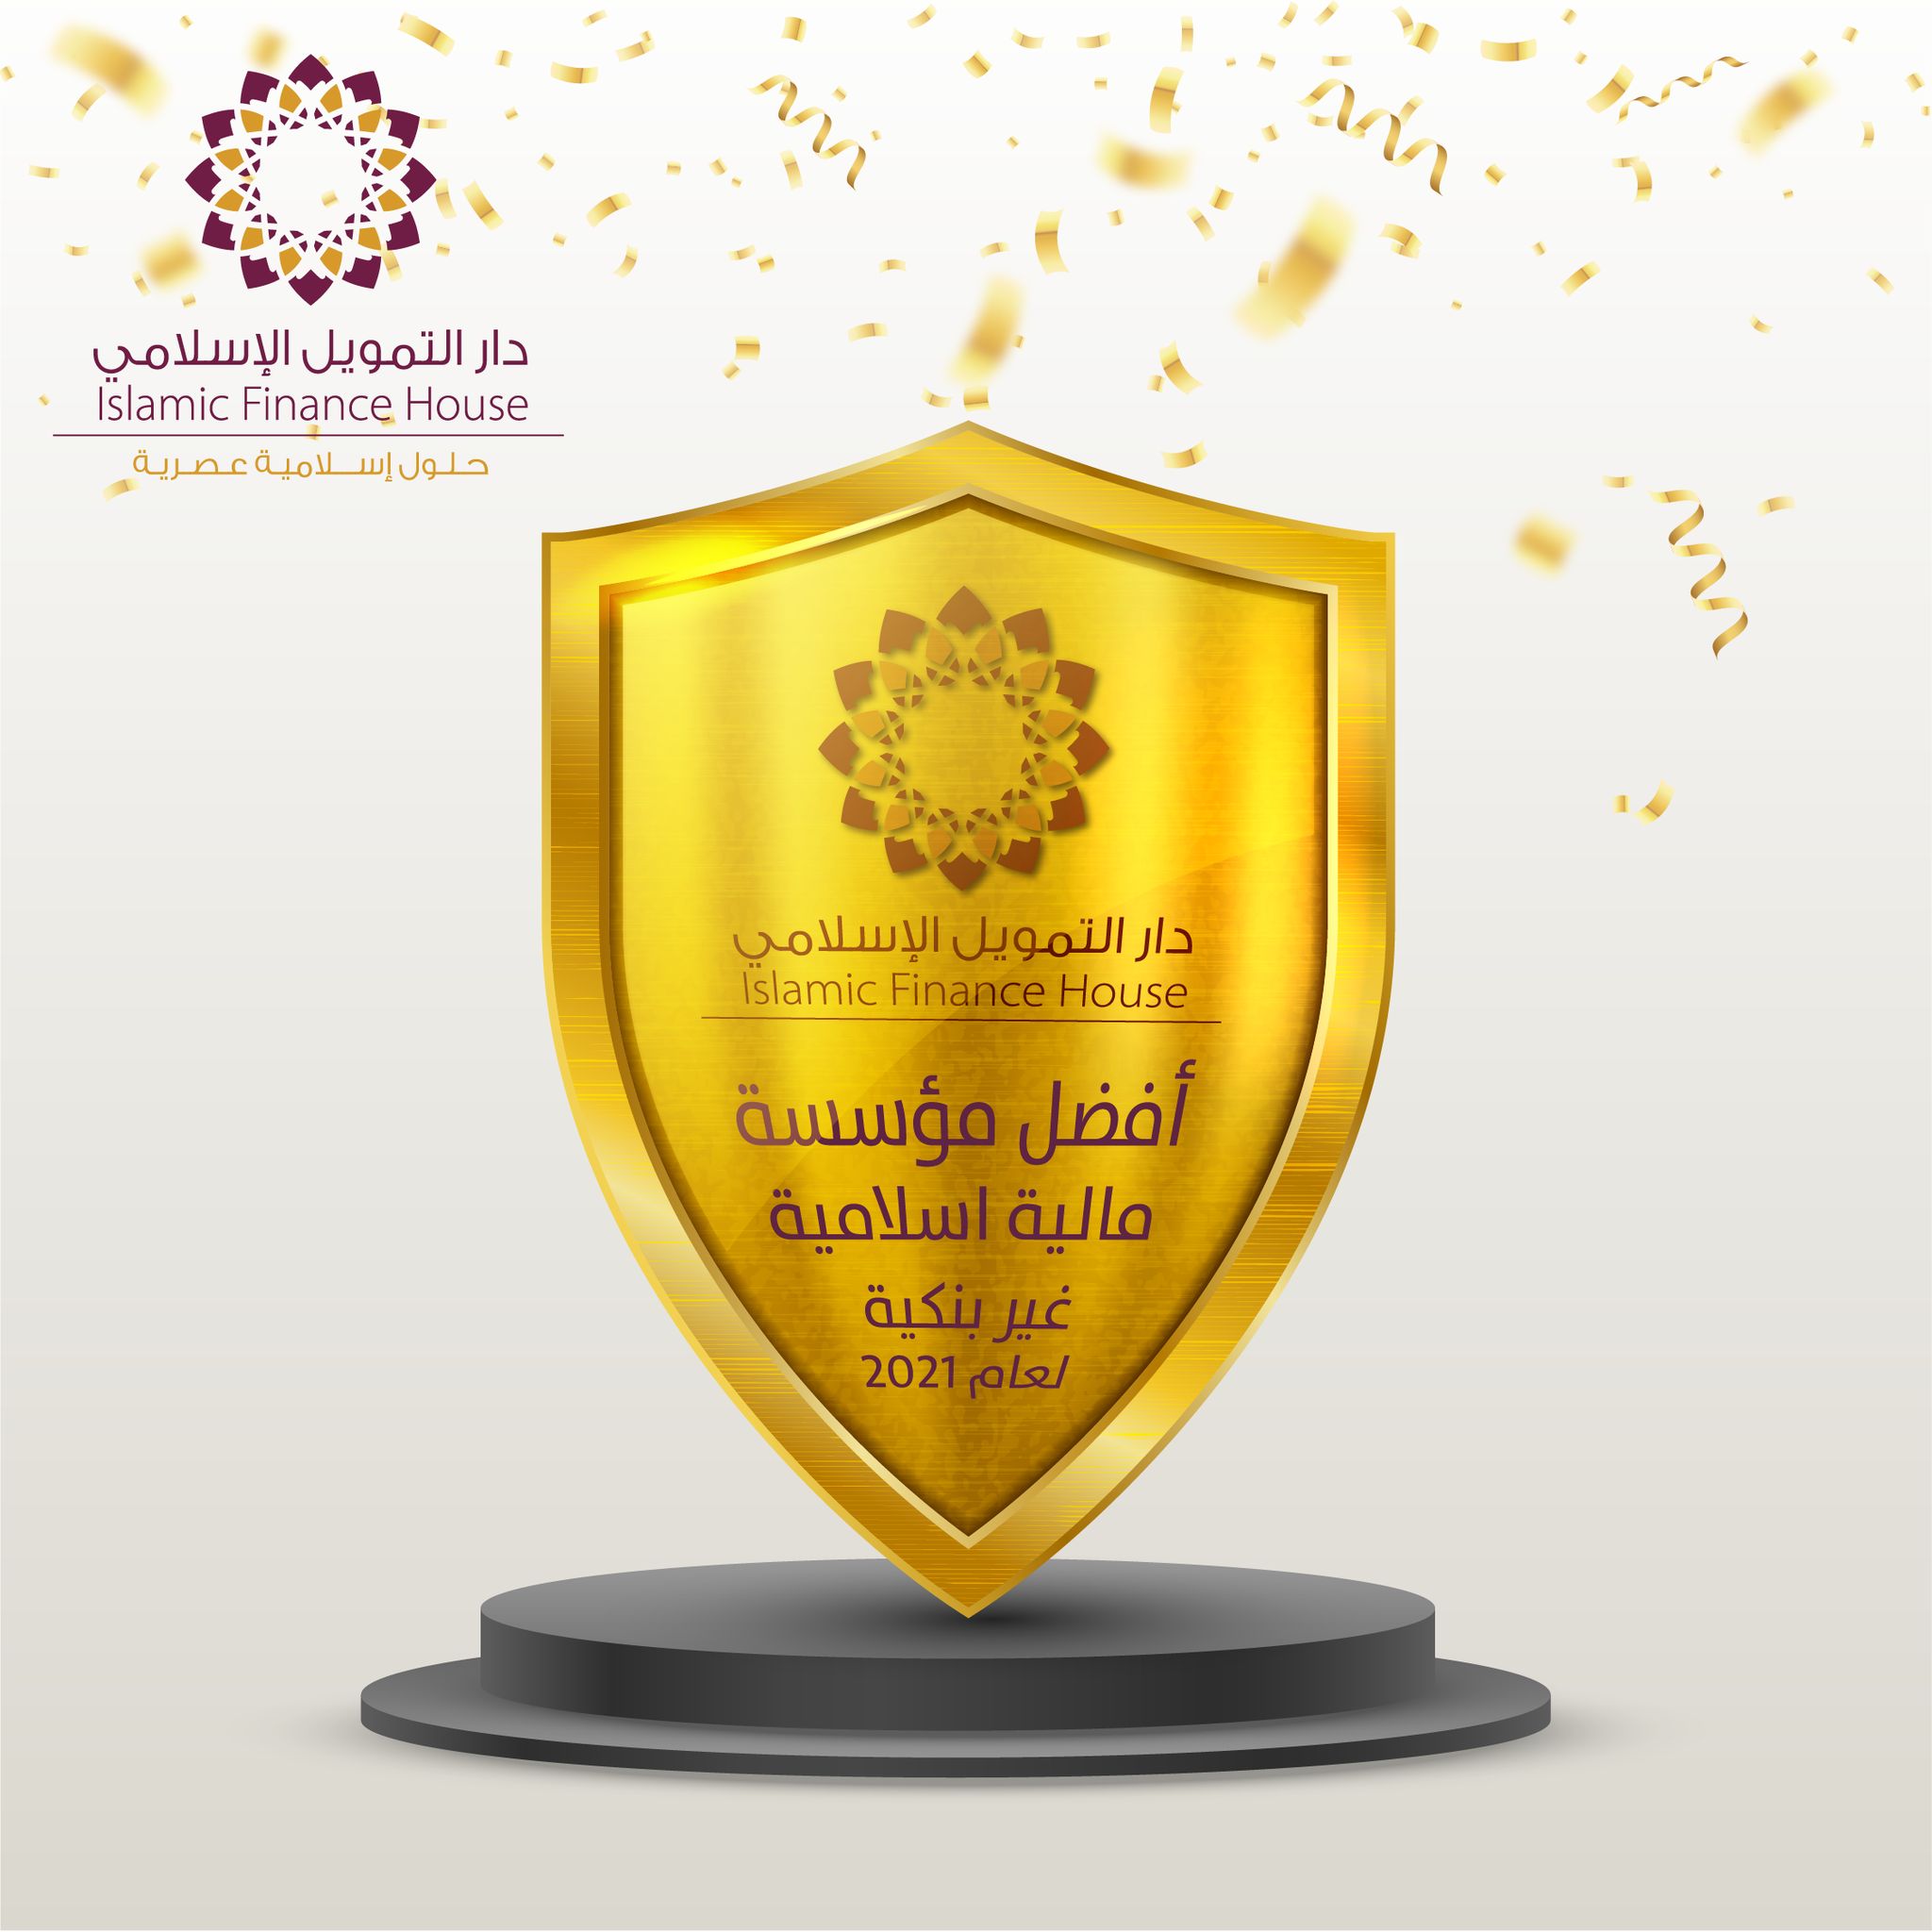 A new award for the Islamic Finance House Company from an international magazine